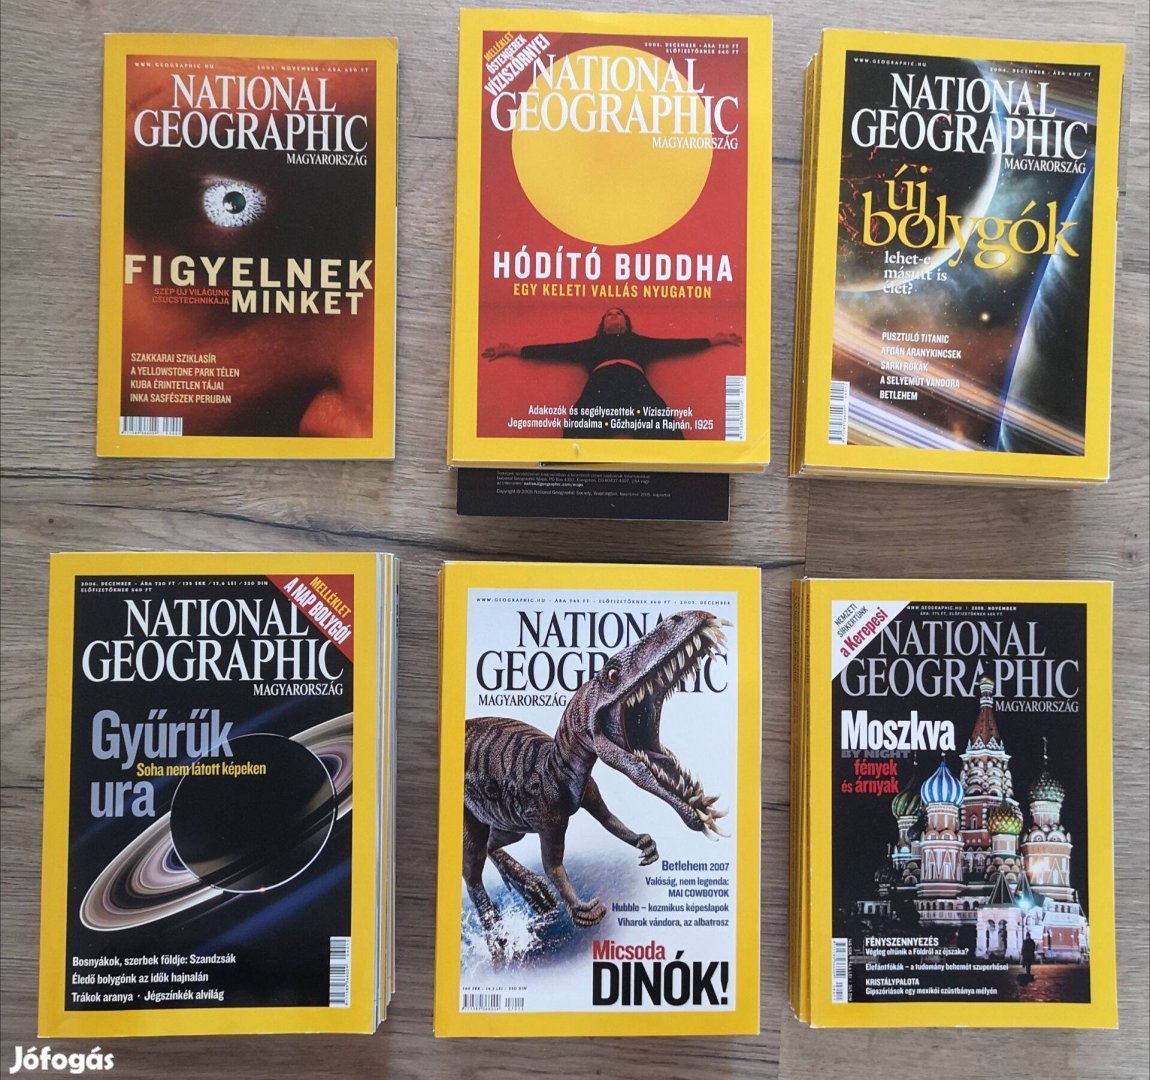 National Geographic Magyarország